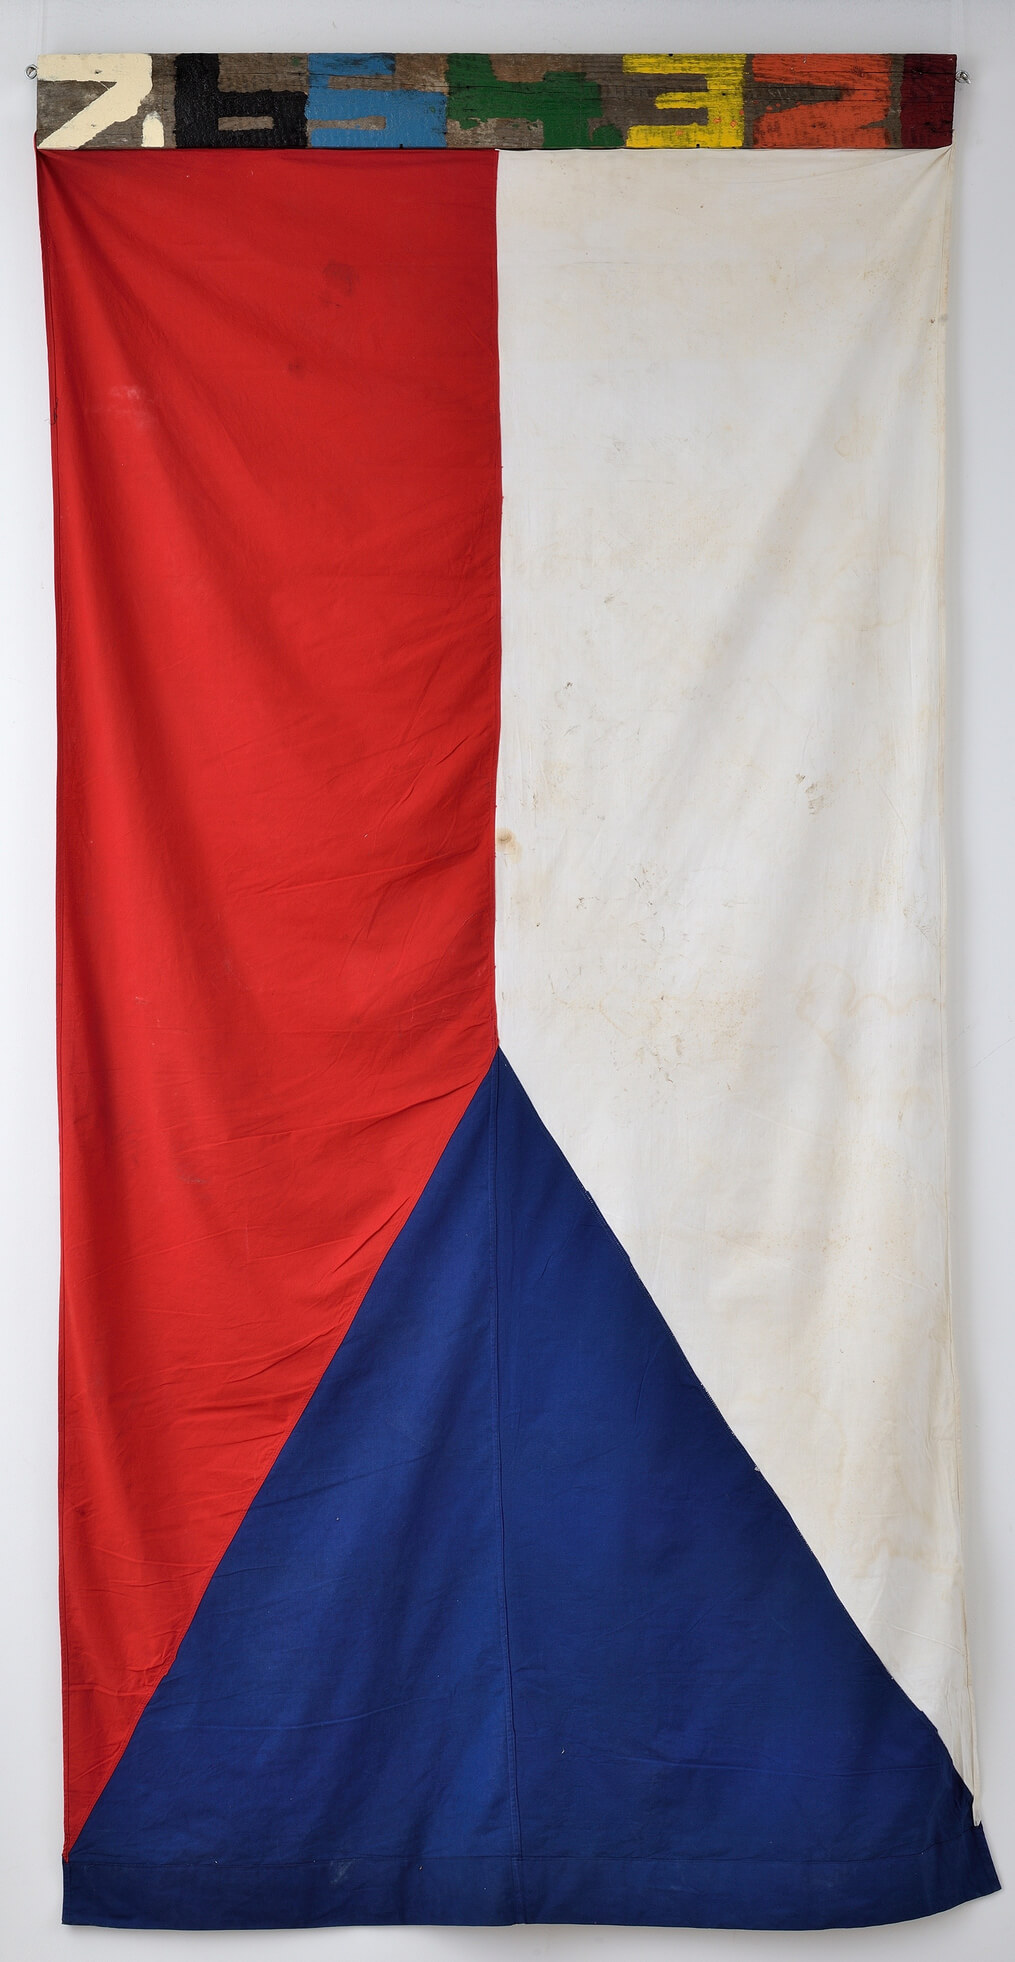 Monument for the flag of czechoslovak socialist republic